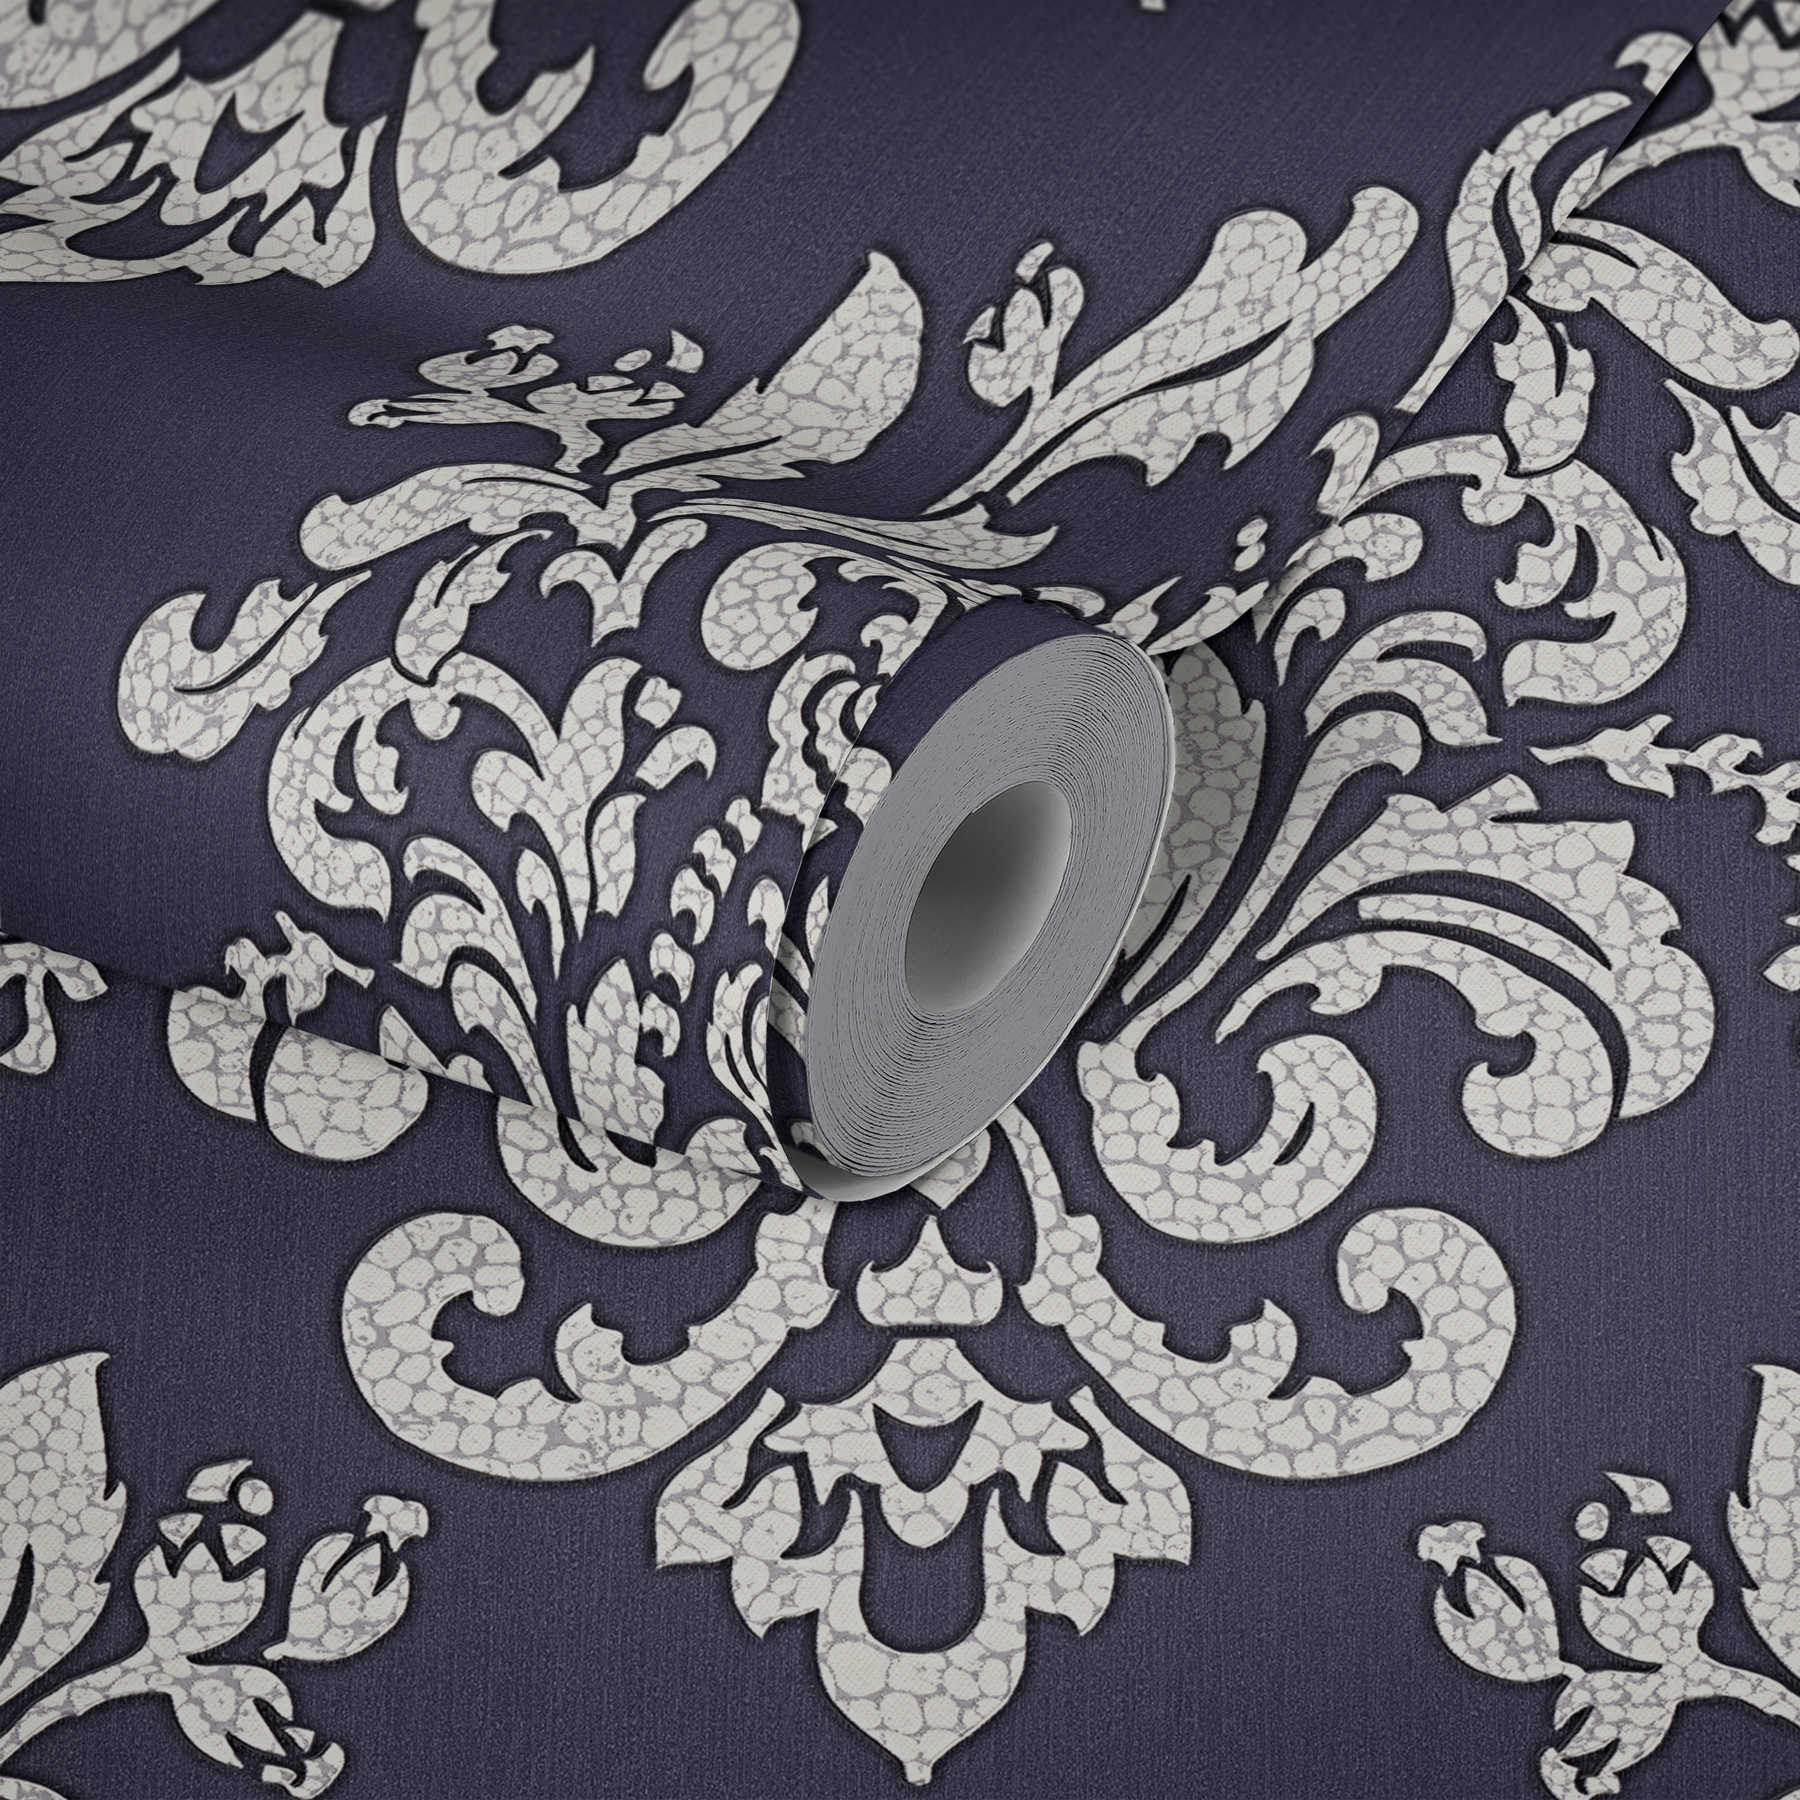             Ornament Tapete mit Krakelee Effekt – Metallic, Violett
        